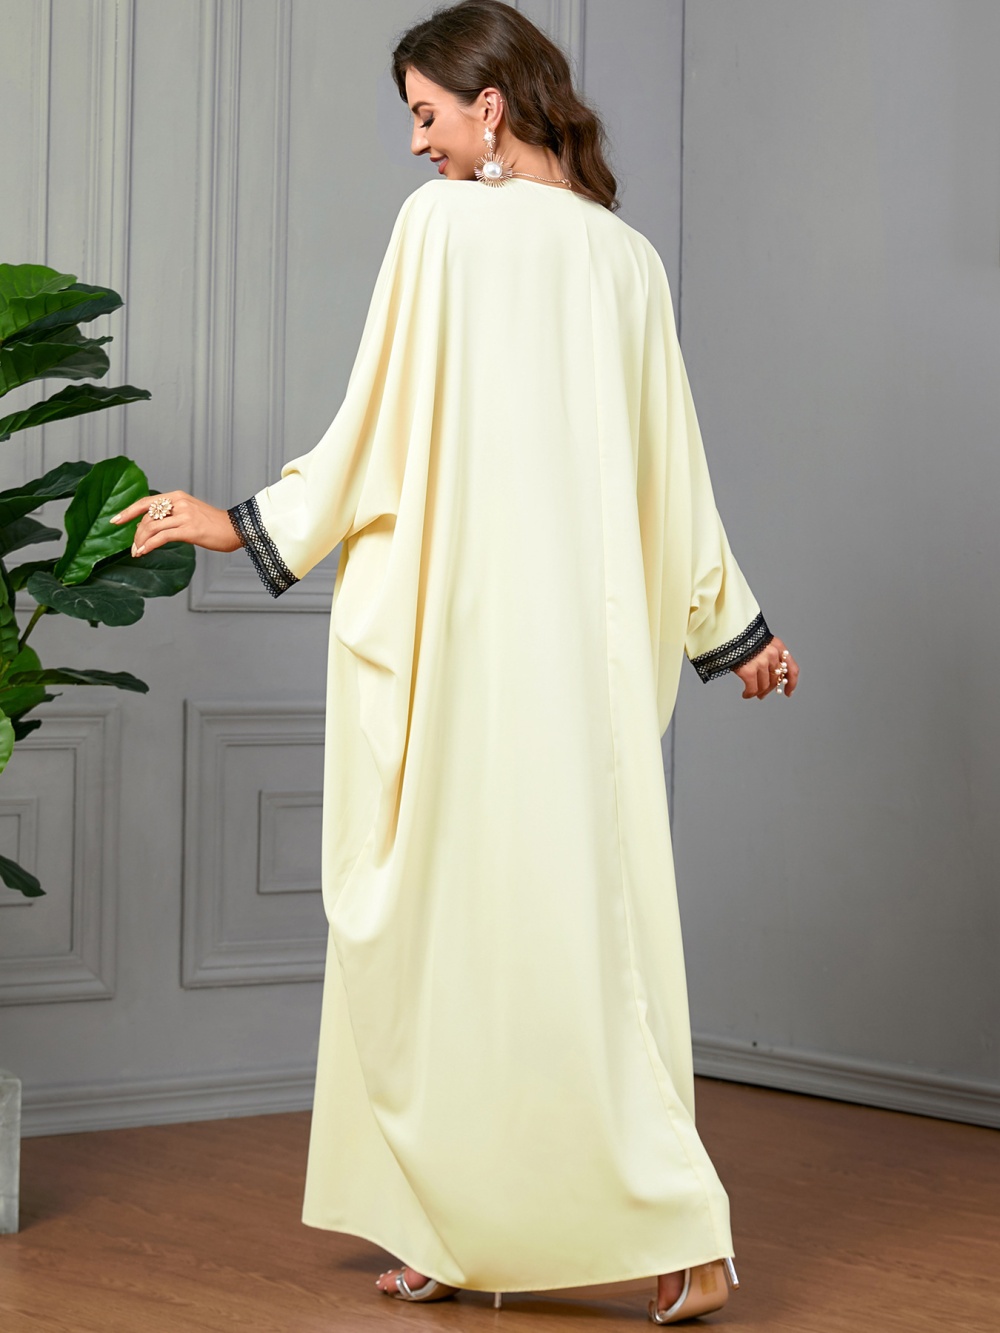 Large yard bat sleeve loose tassels white dress